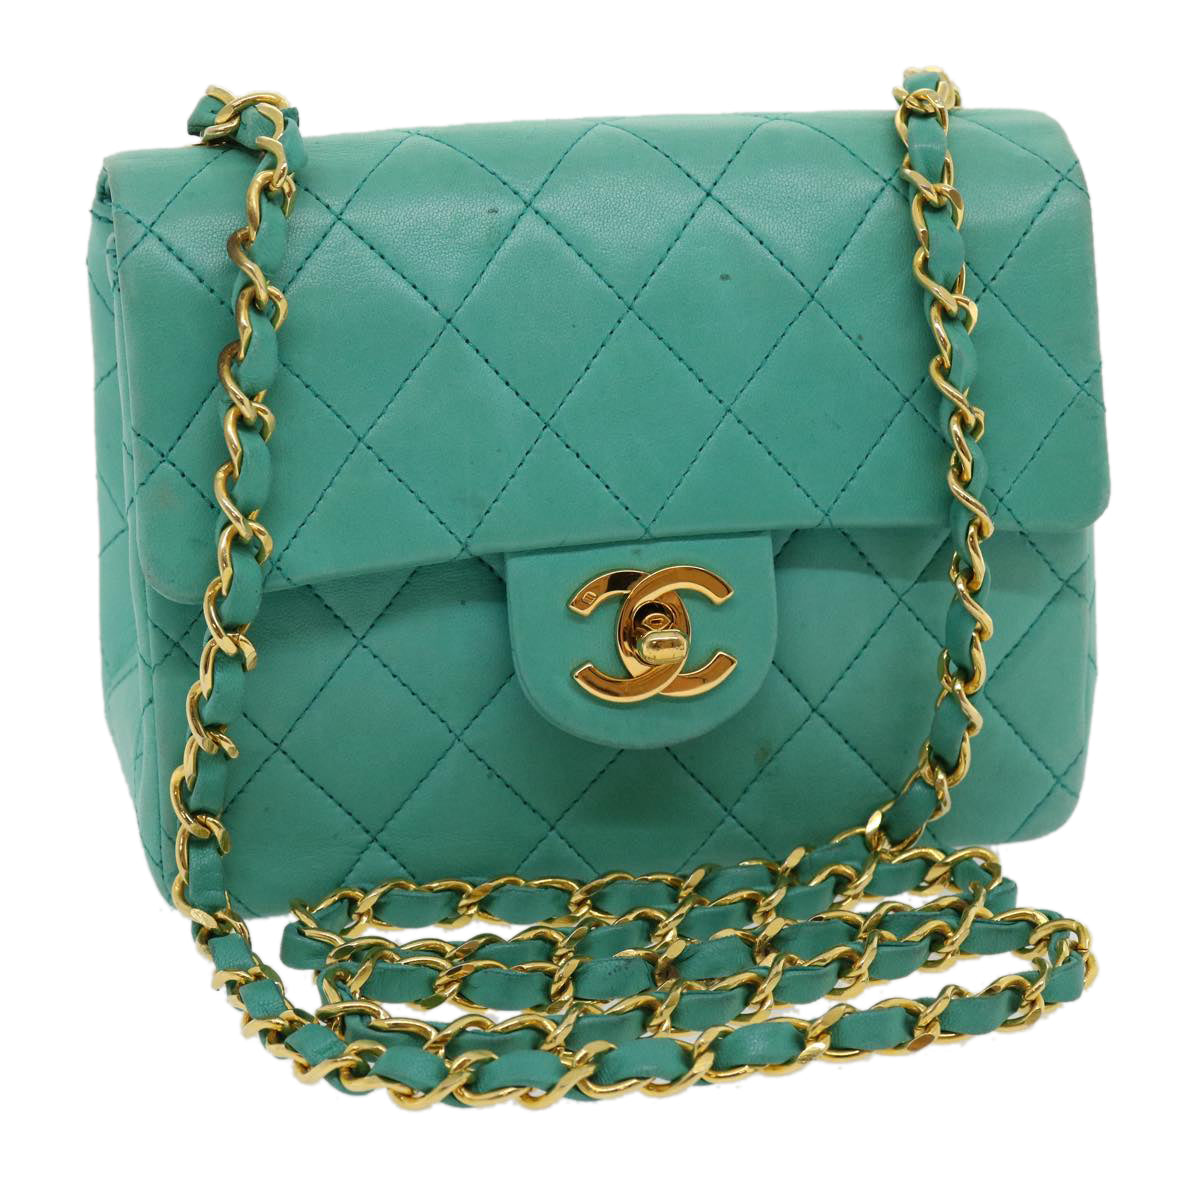 Chanel Blue Classic Caviar Leather Rectangular Mini Flap Bag